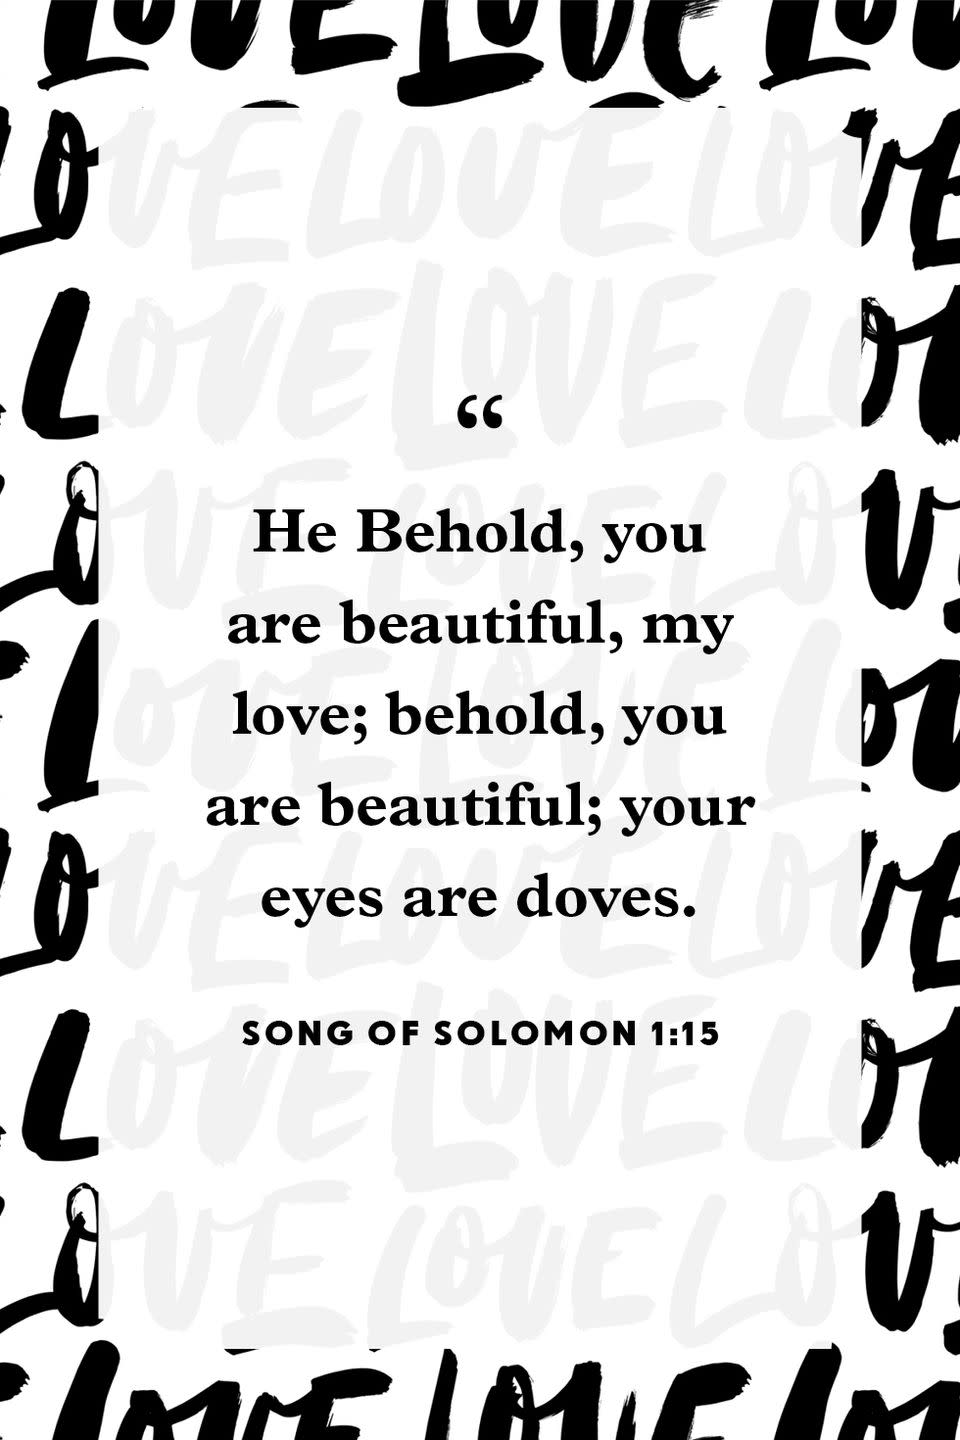 19) Song of Solomon 1:15